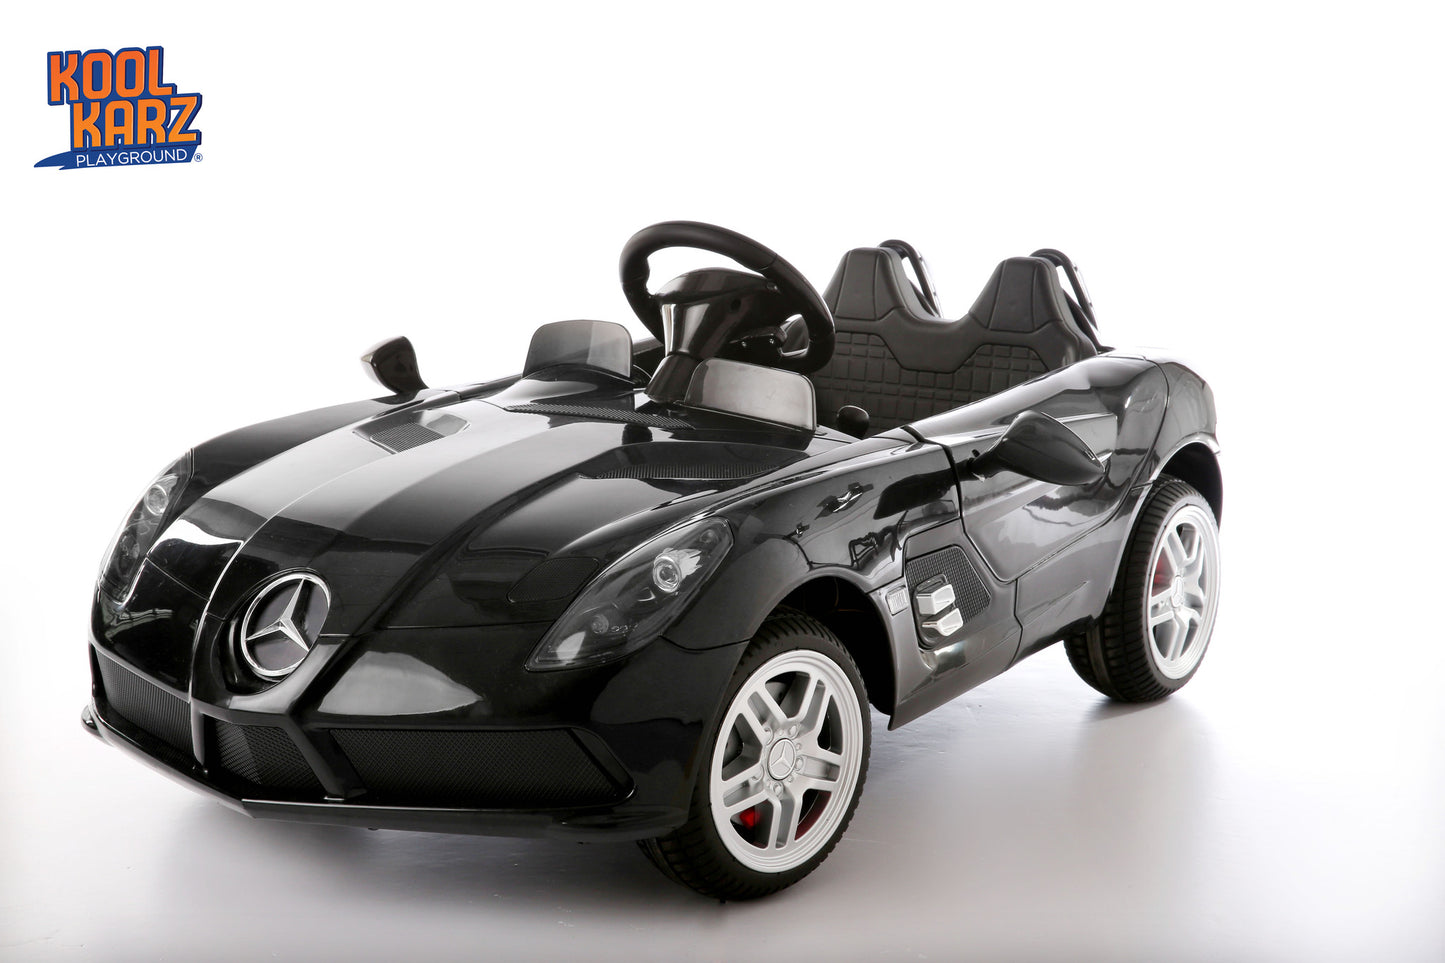 Kool Karz®Mercedes Benz SLR AMG Electric Ride On Toy Car